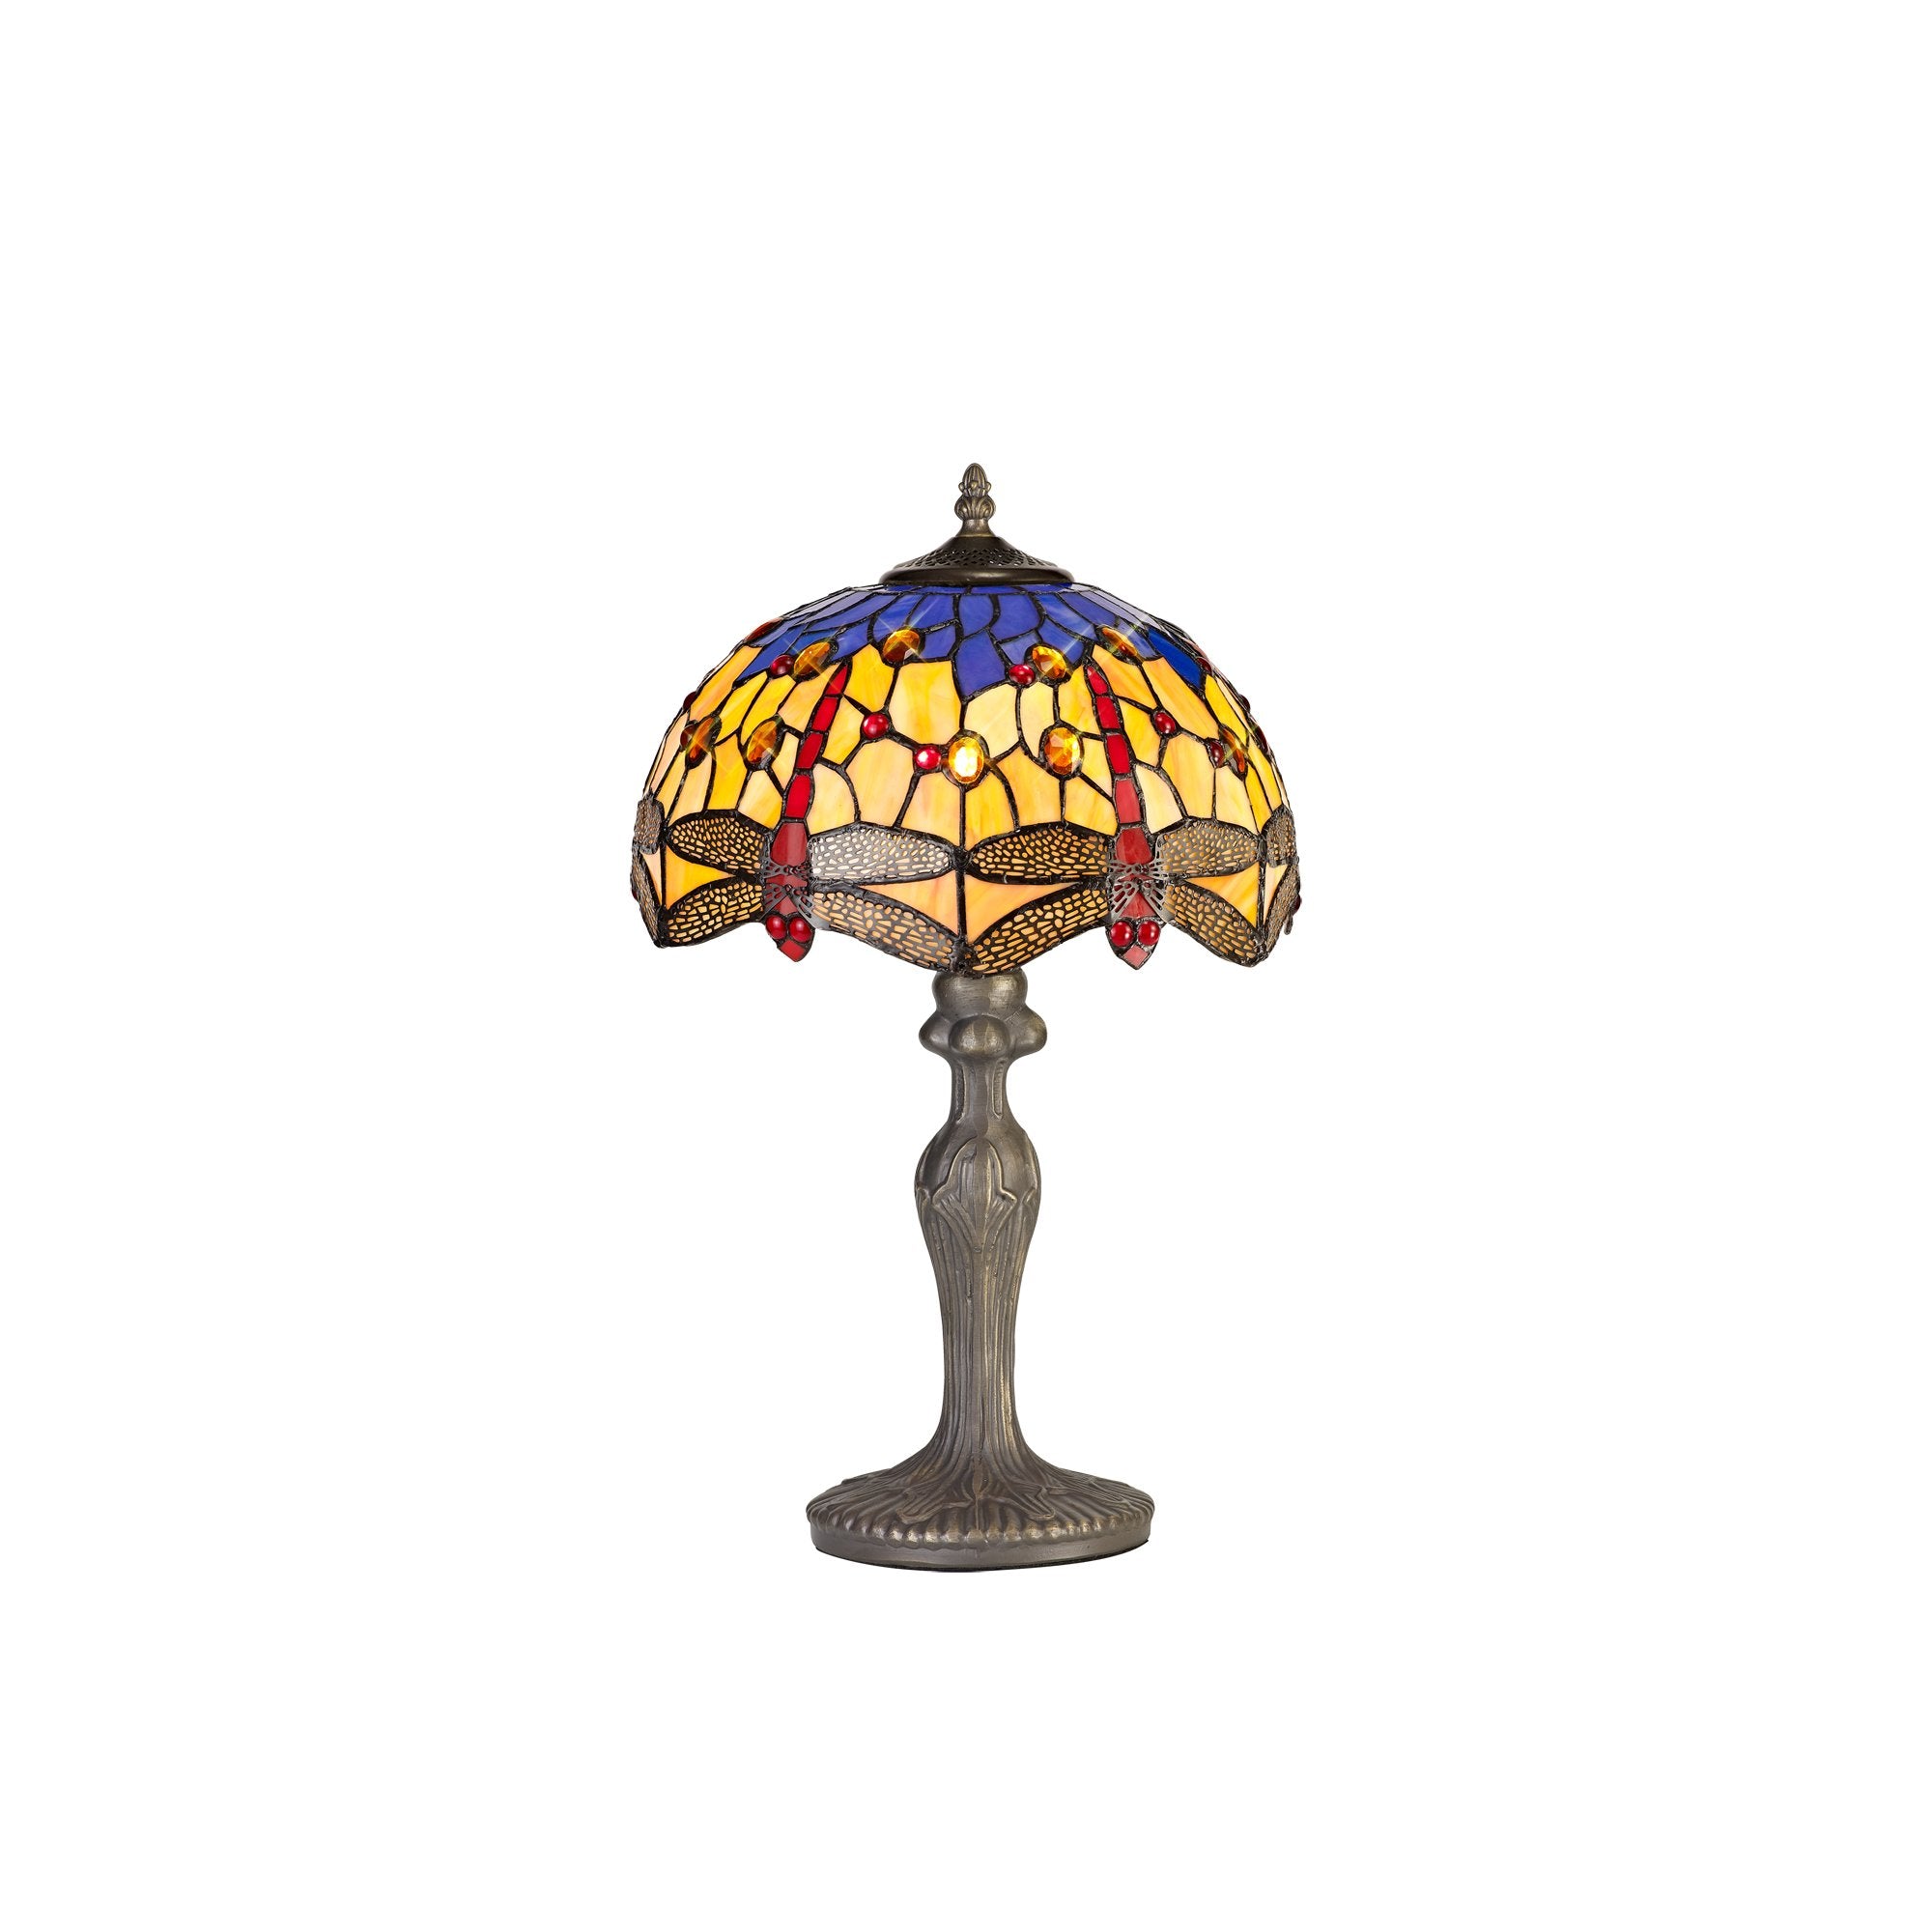 Dragonfly Tiffany Table Lamp